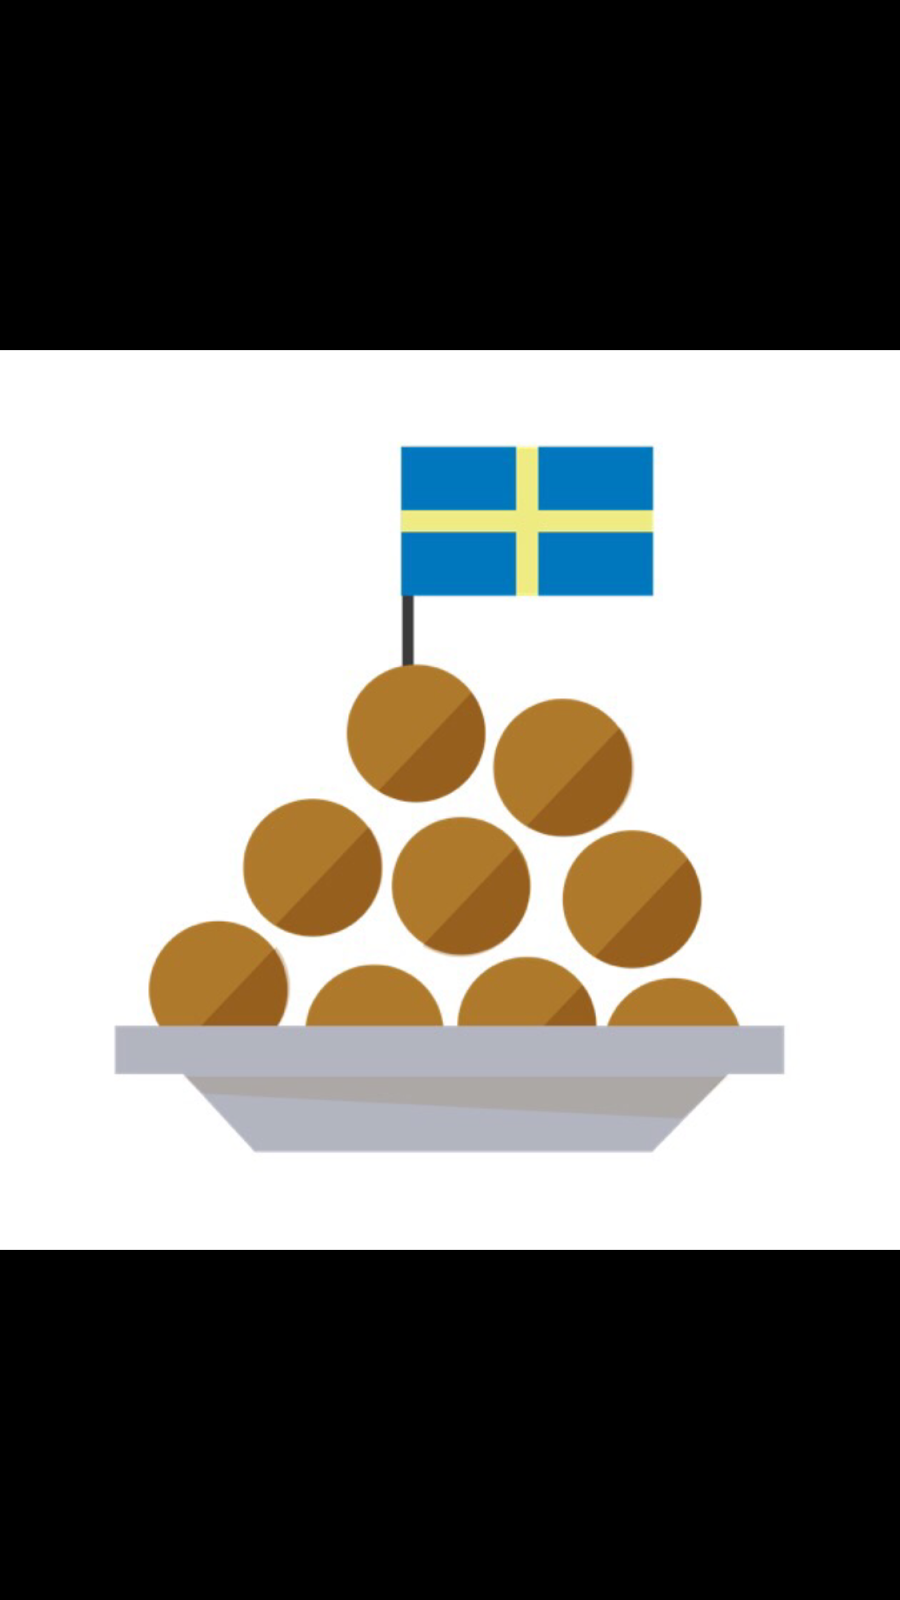 Ikea emoticons emoji